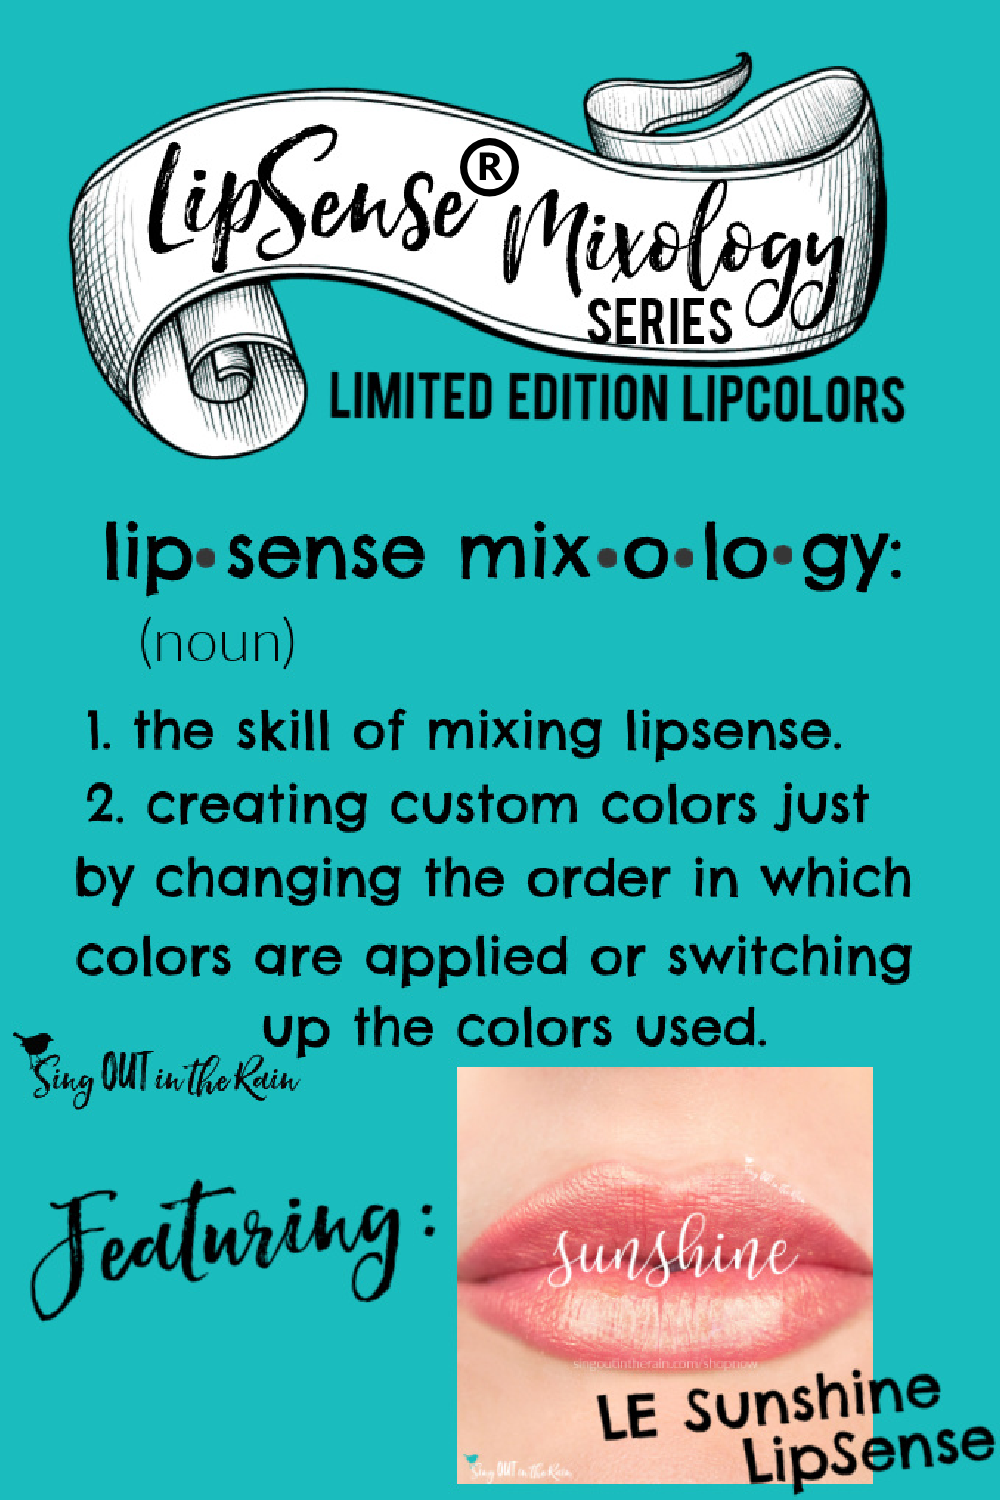 The Ultimate Guide to Sunshine LipSense Mixology